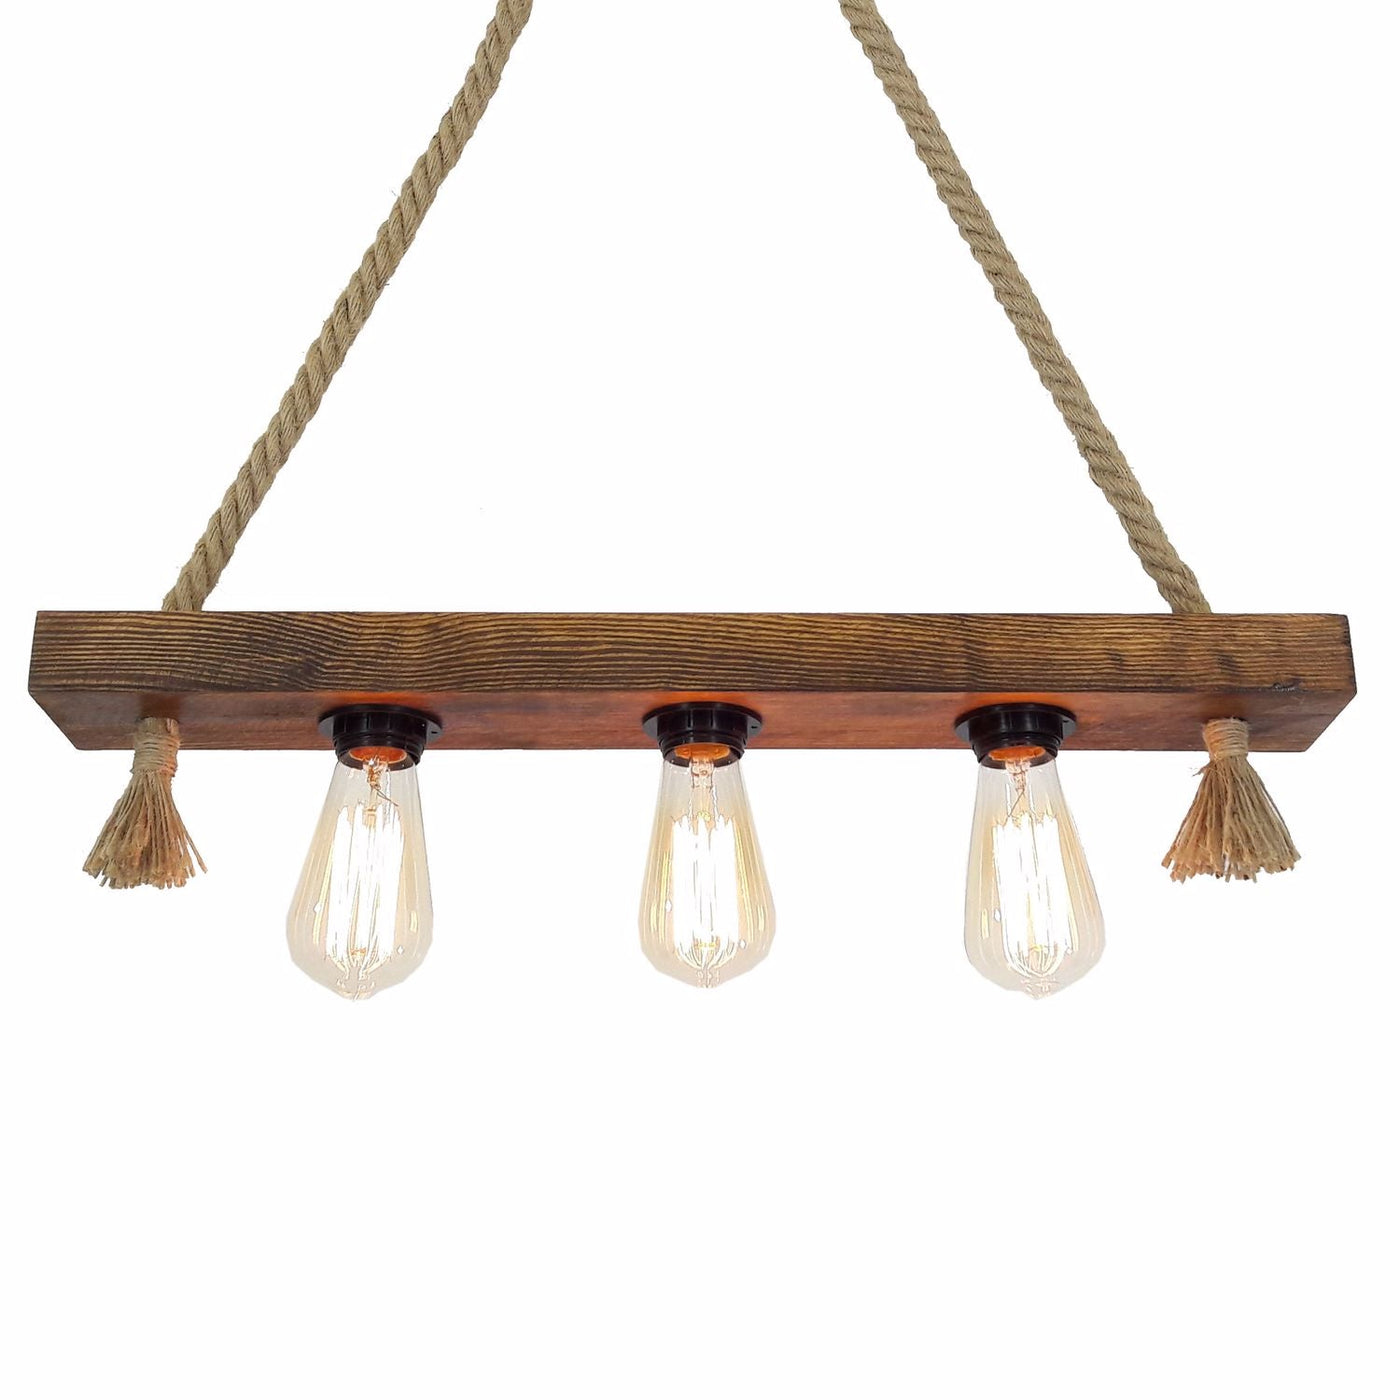 HT099 | Industrial Pendant Lamp, Wood, Retro Design | 3x E27 Bulbs